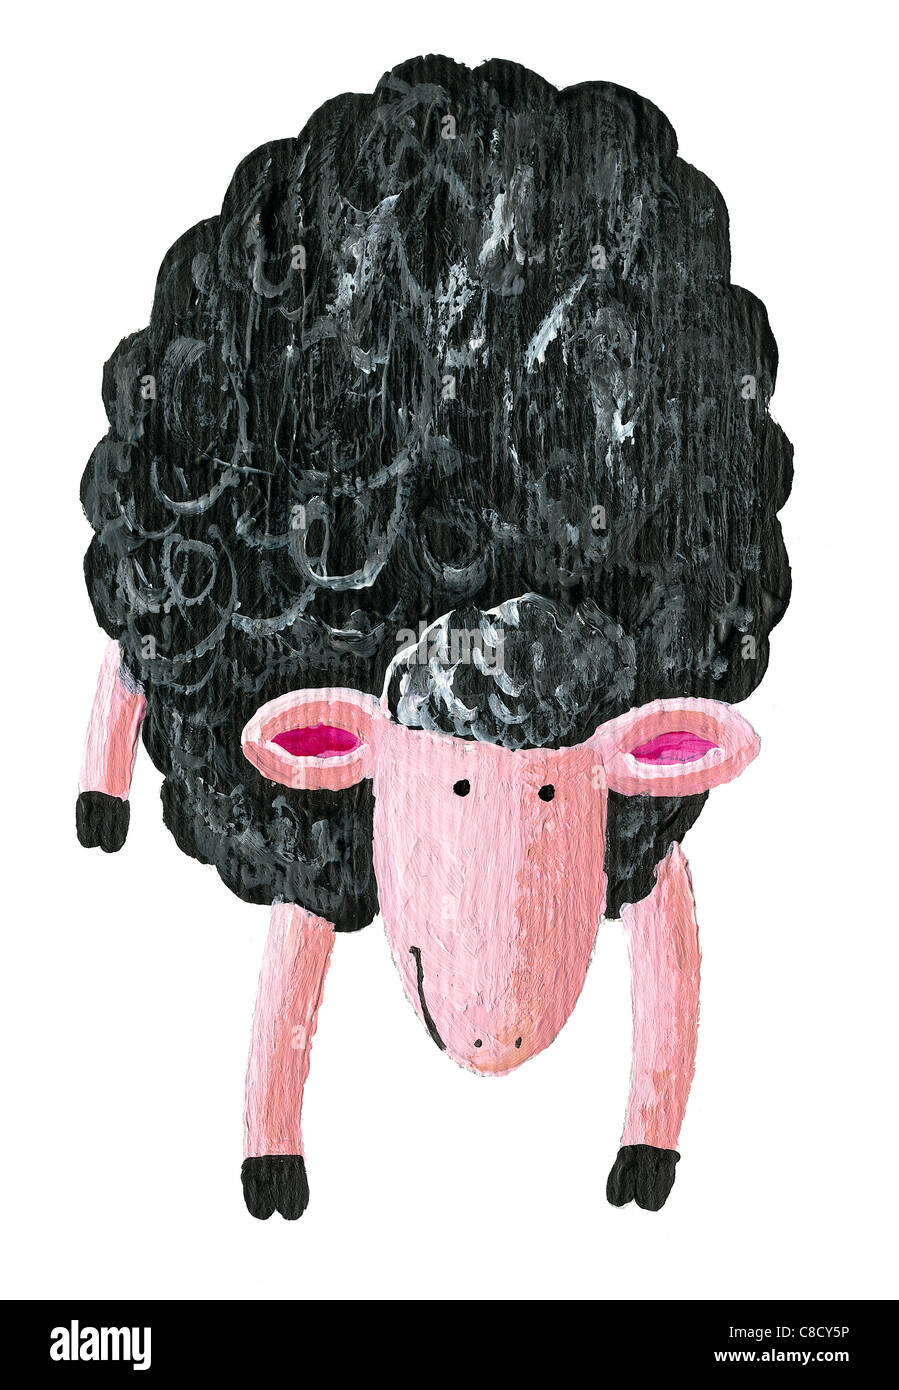 Acrylic illustration of funny black sheep Stock Photo